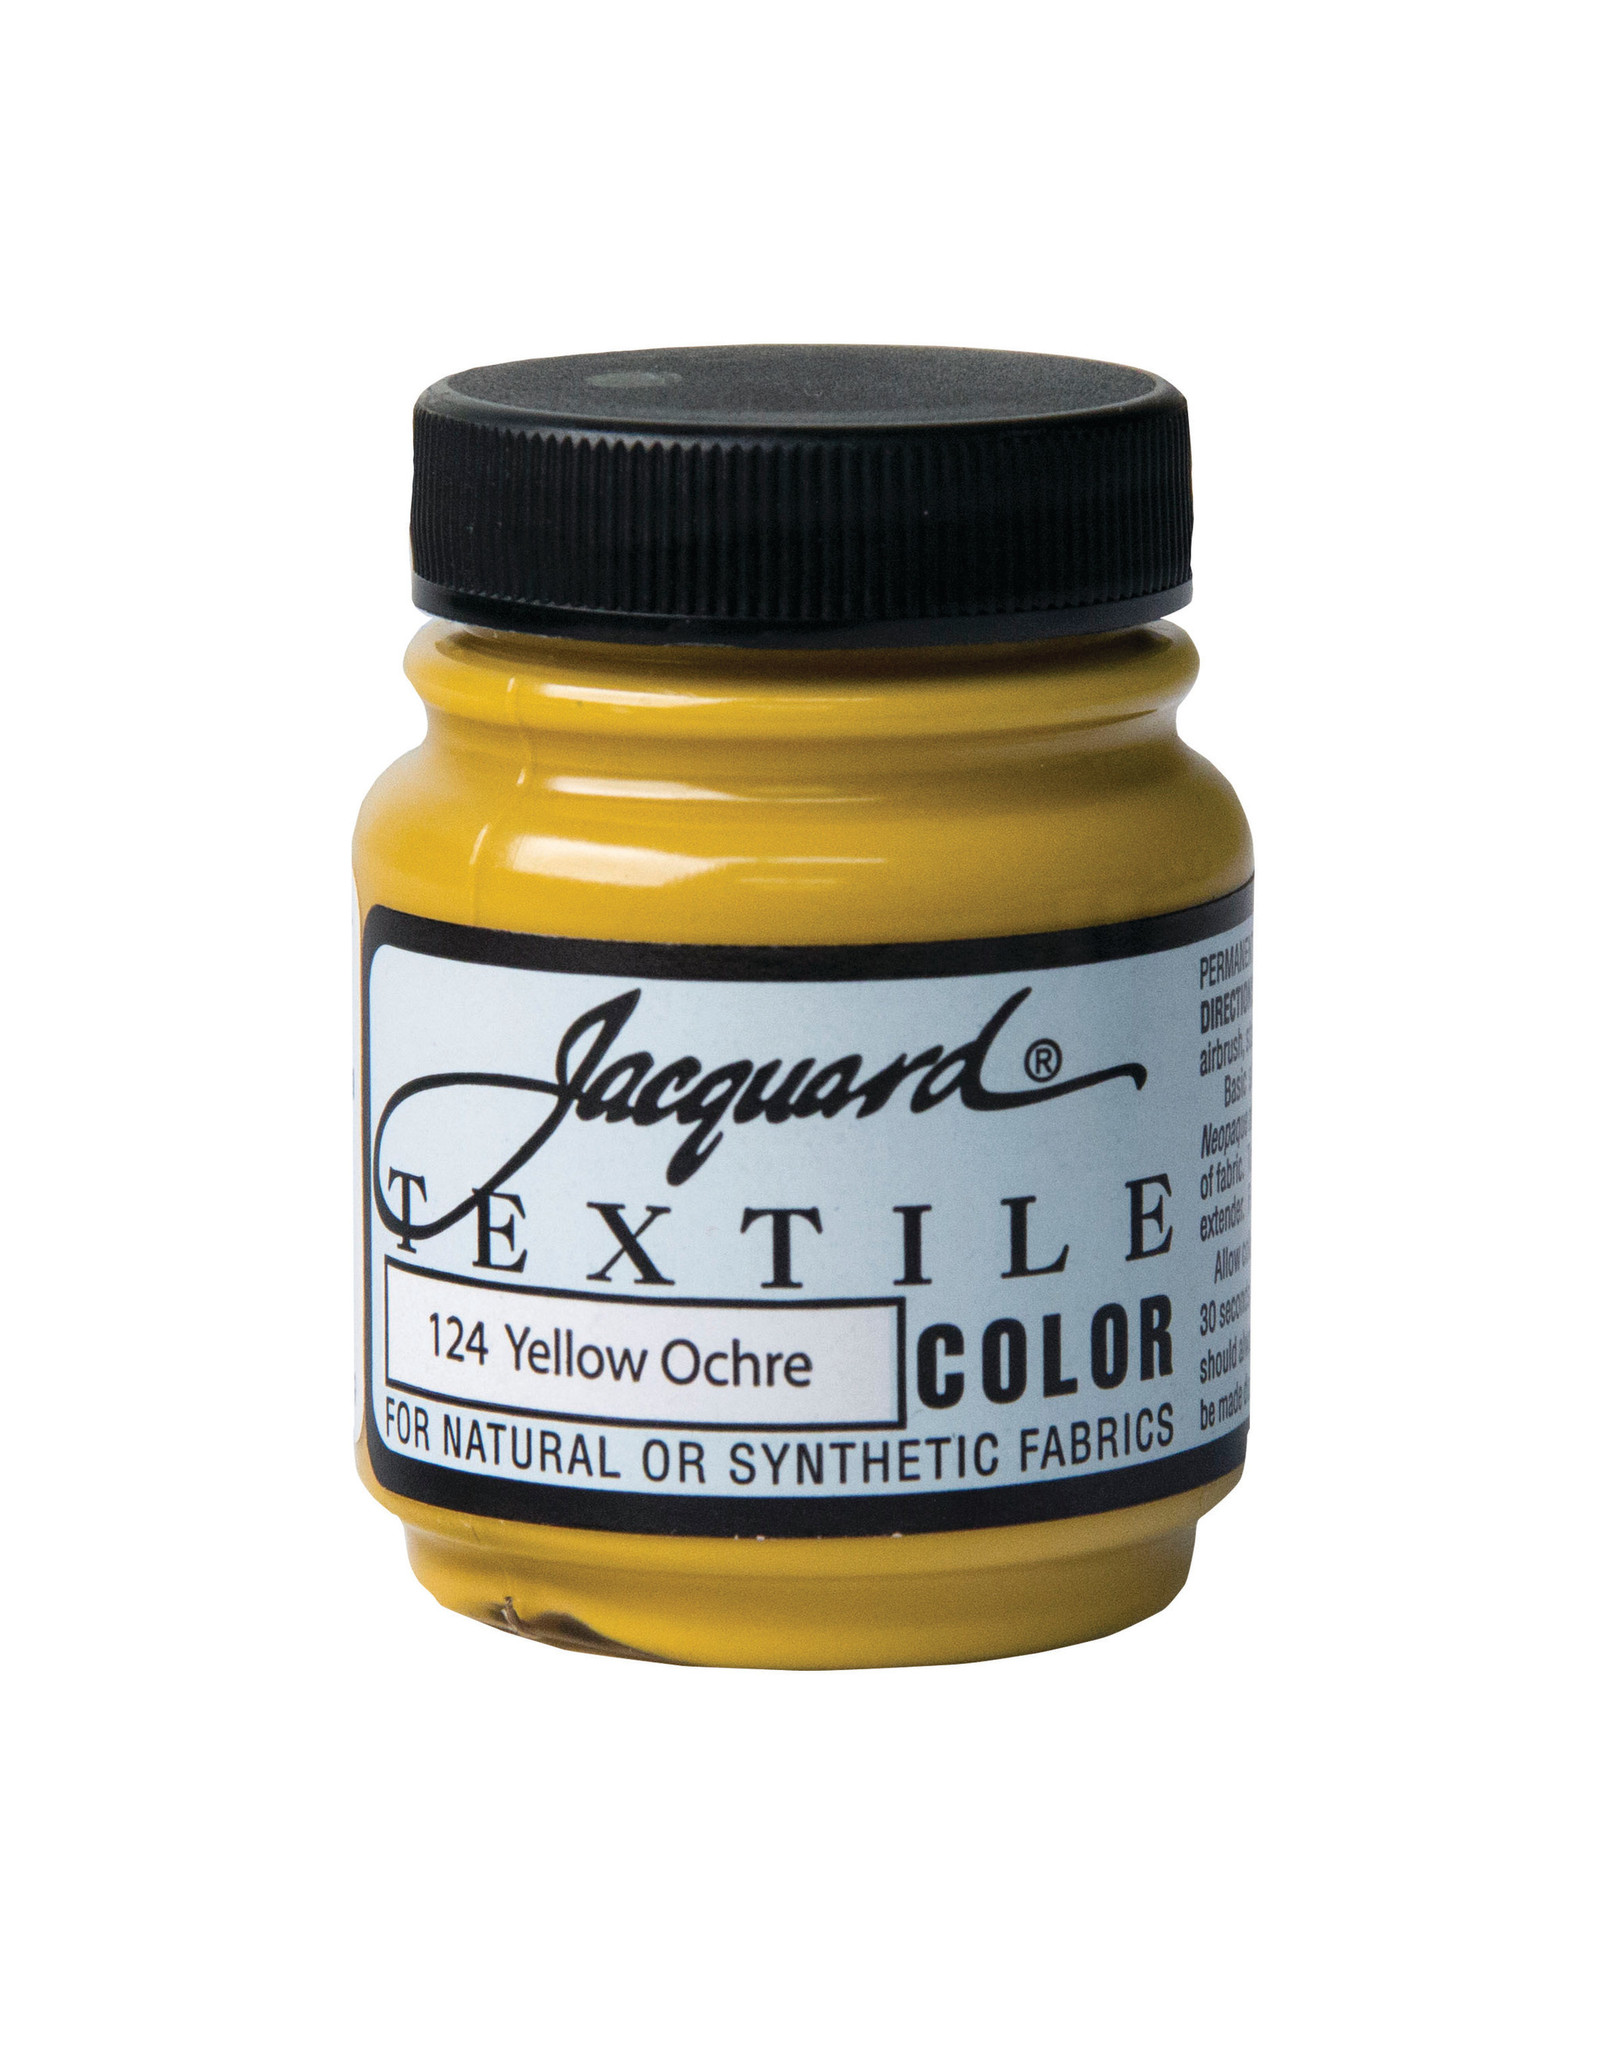 Jacquard Jacquard Textile Color, #124 Yellow Ochre